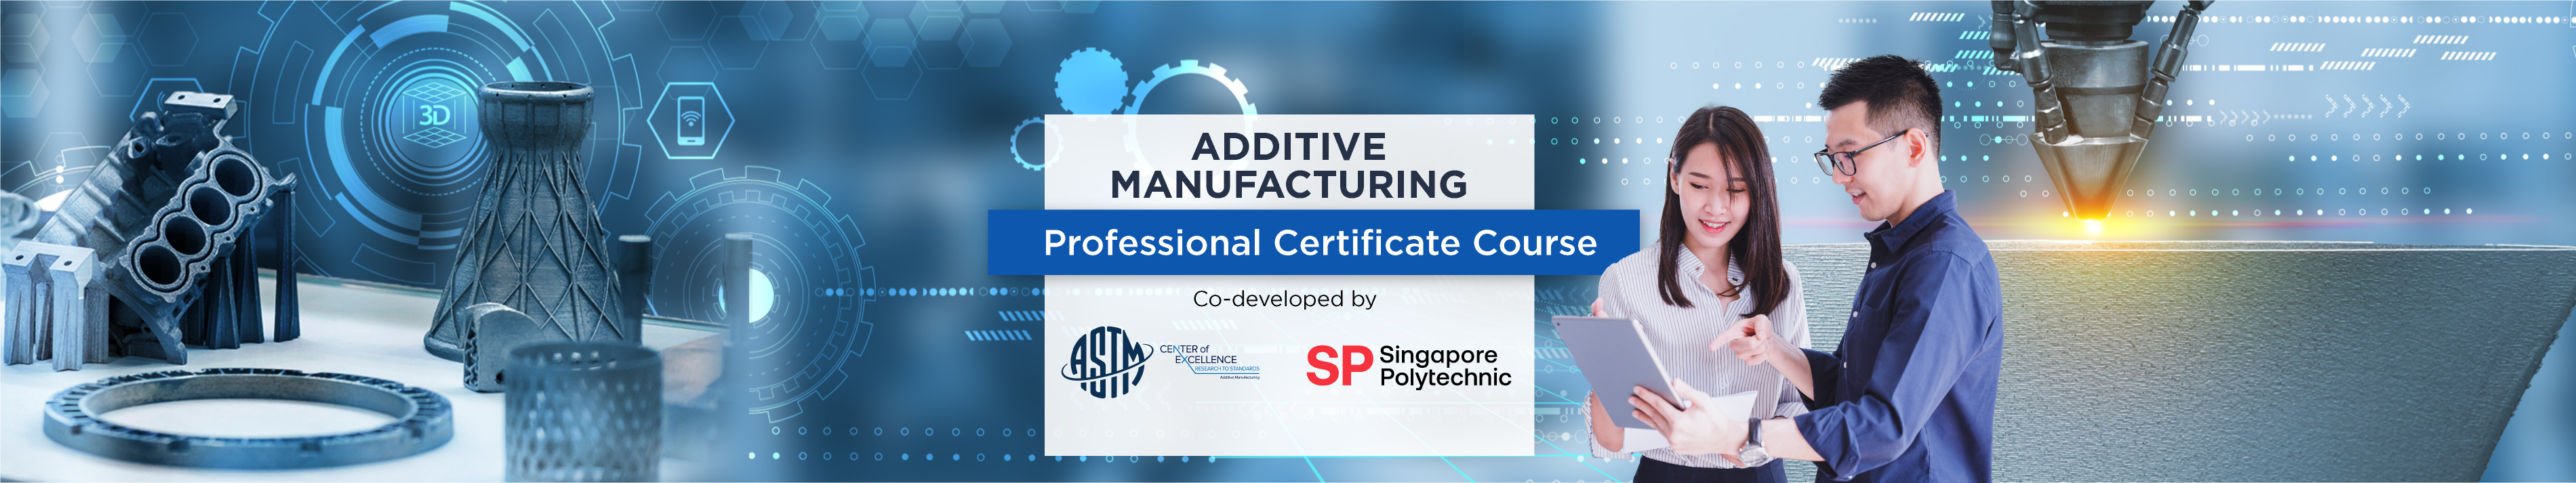 Additive Manufacturing Professional Certificate Course